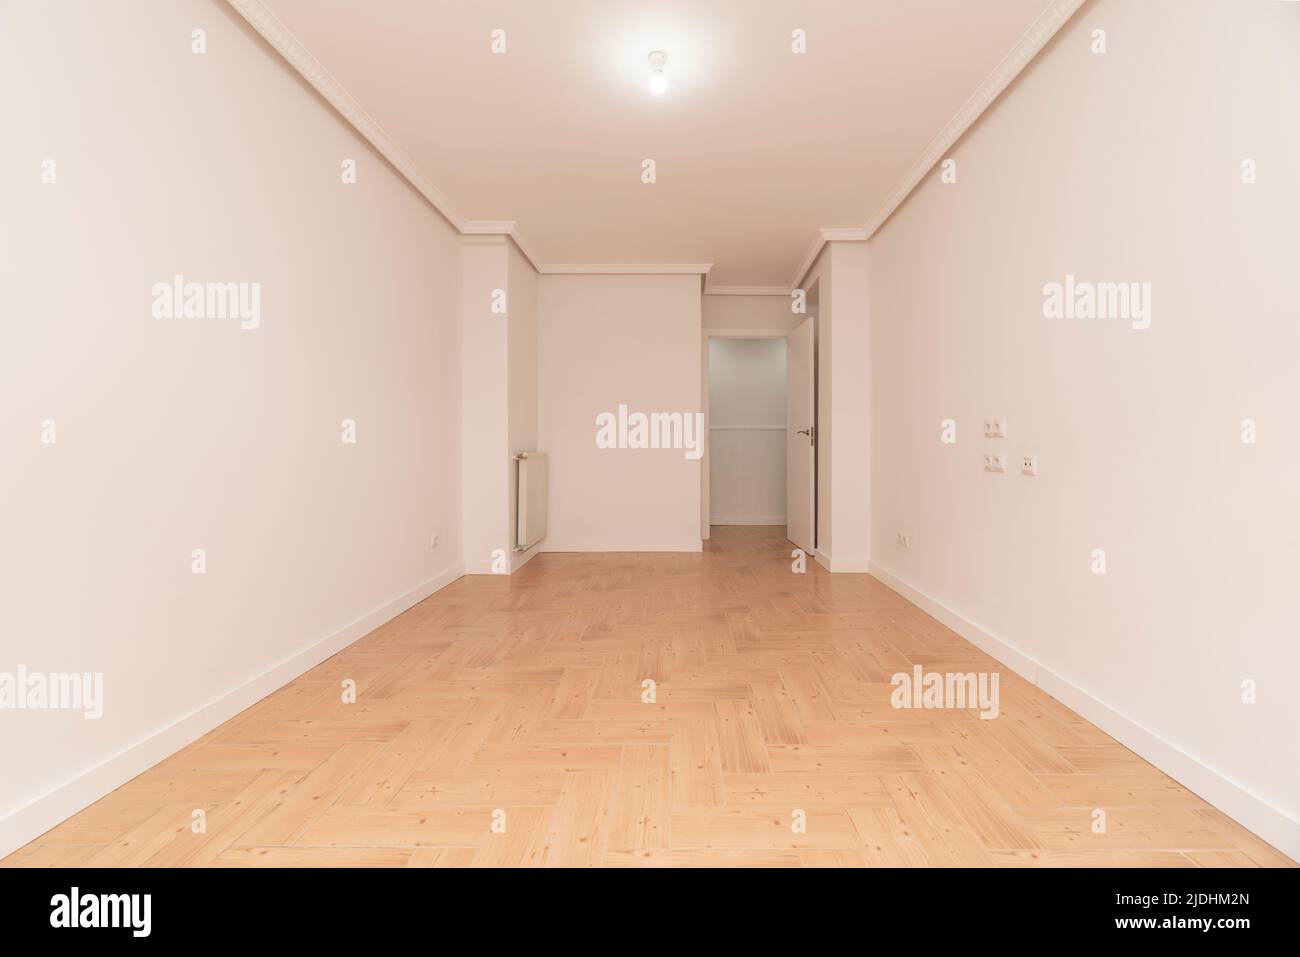 Empty room with wood-like stoneware floors, white painted walls and aluminum radiator Stock Photo